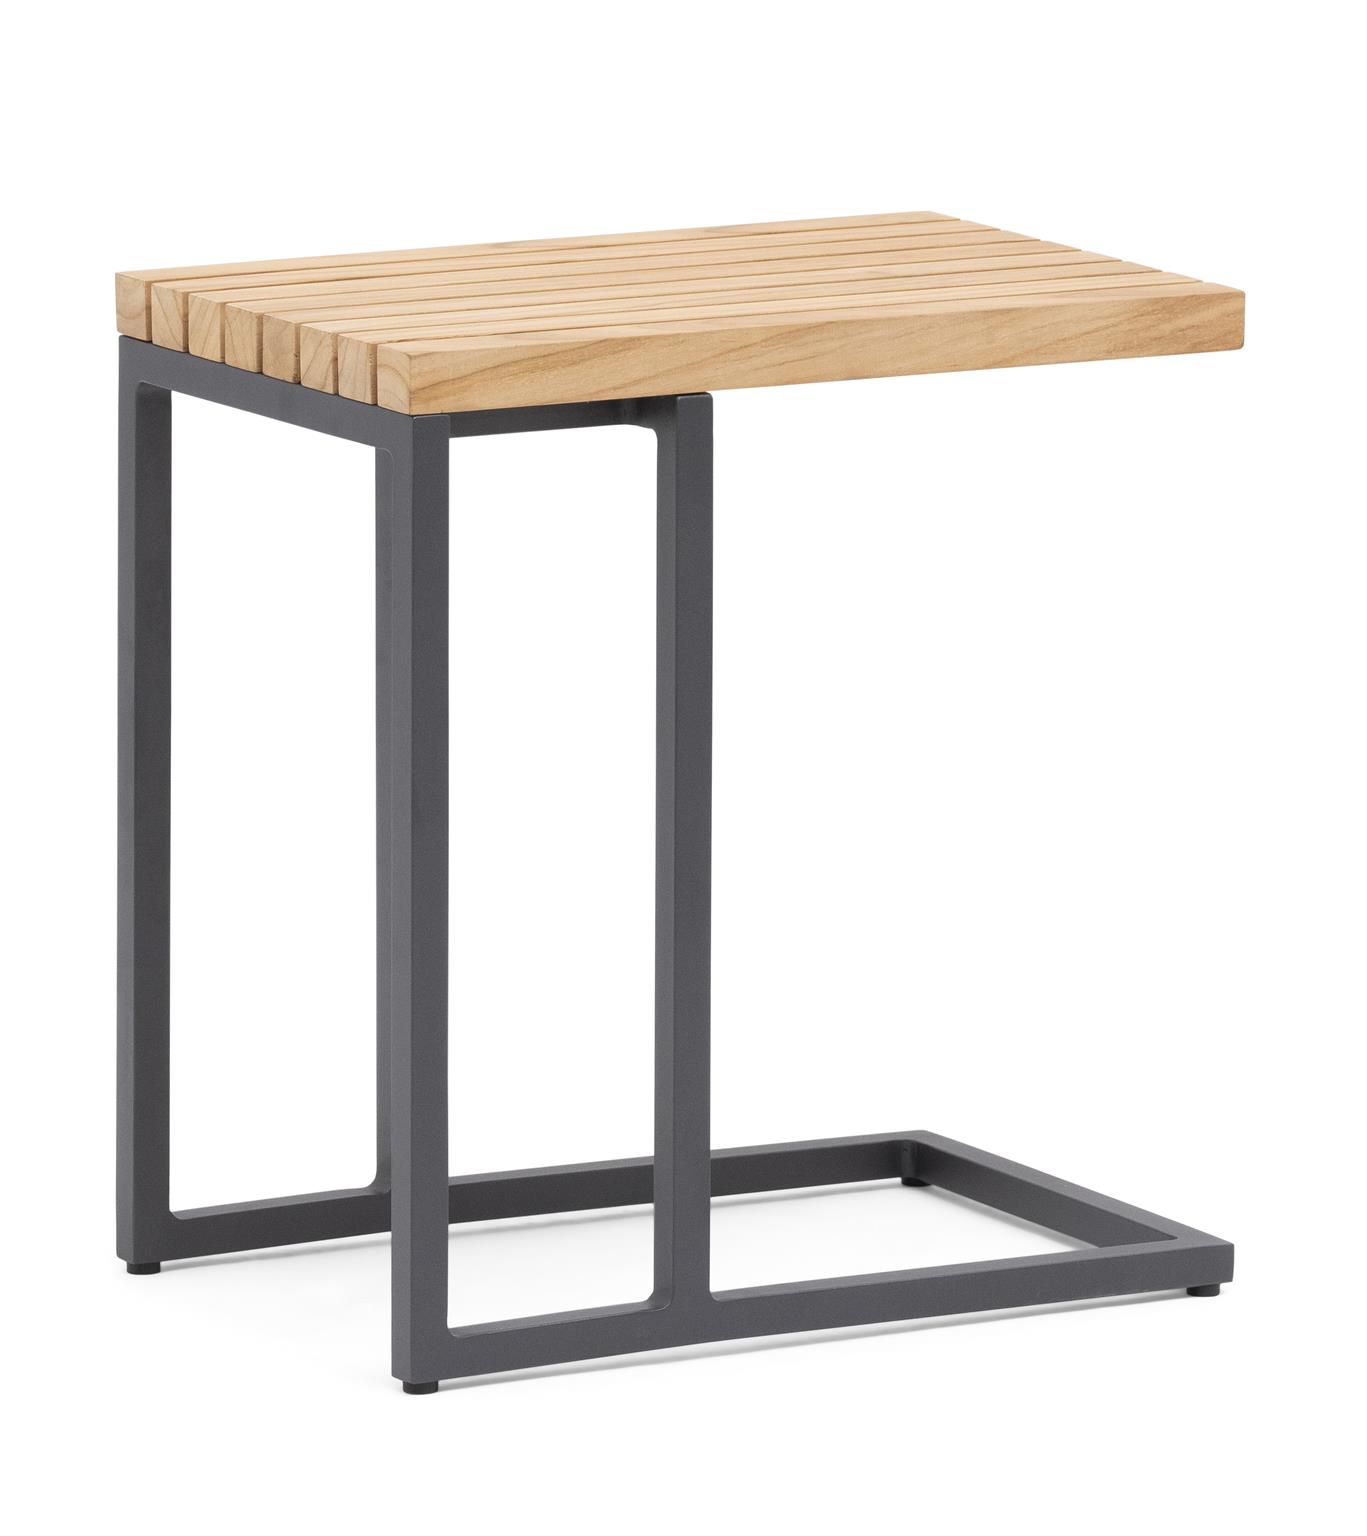 Hillerstorp Oxelunda Avlastningsbord/sidobord. Tillverkat av mörkgrå aluminium med bordsskiva i teak.